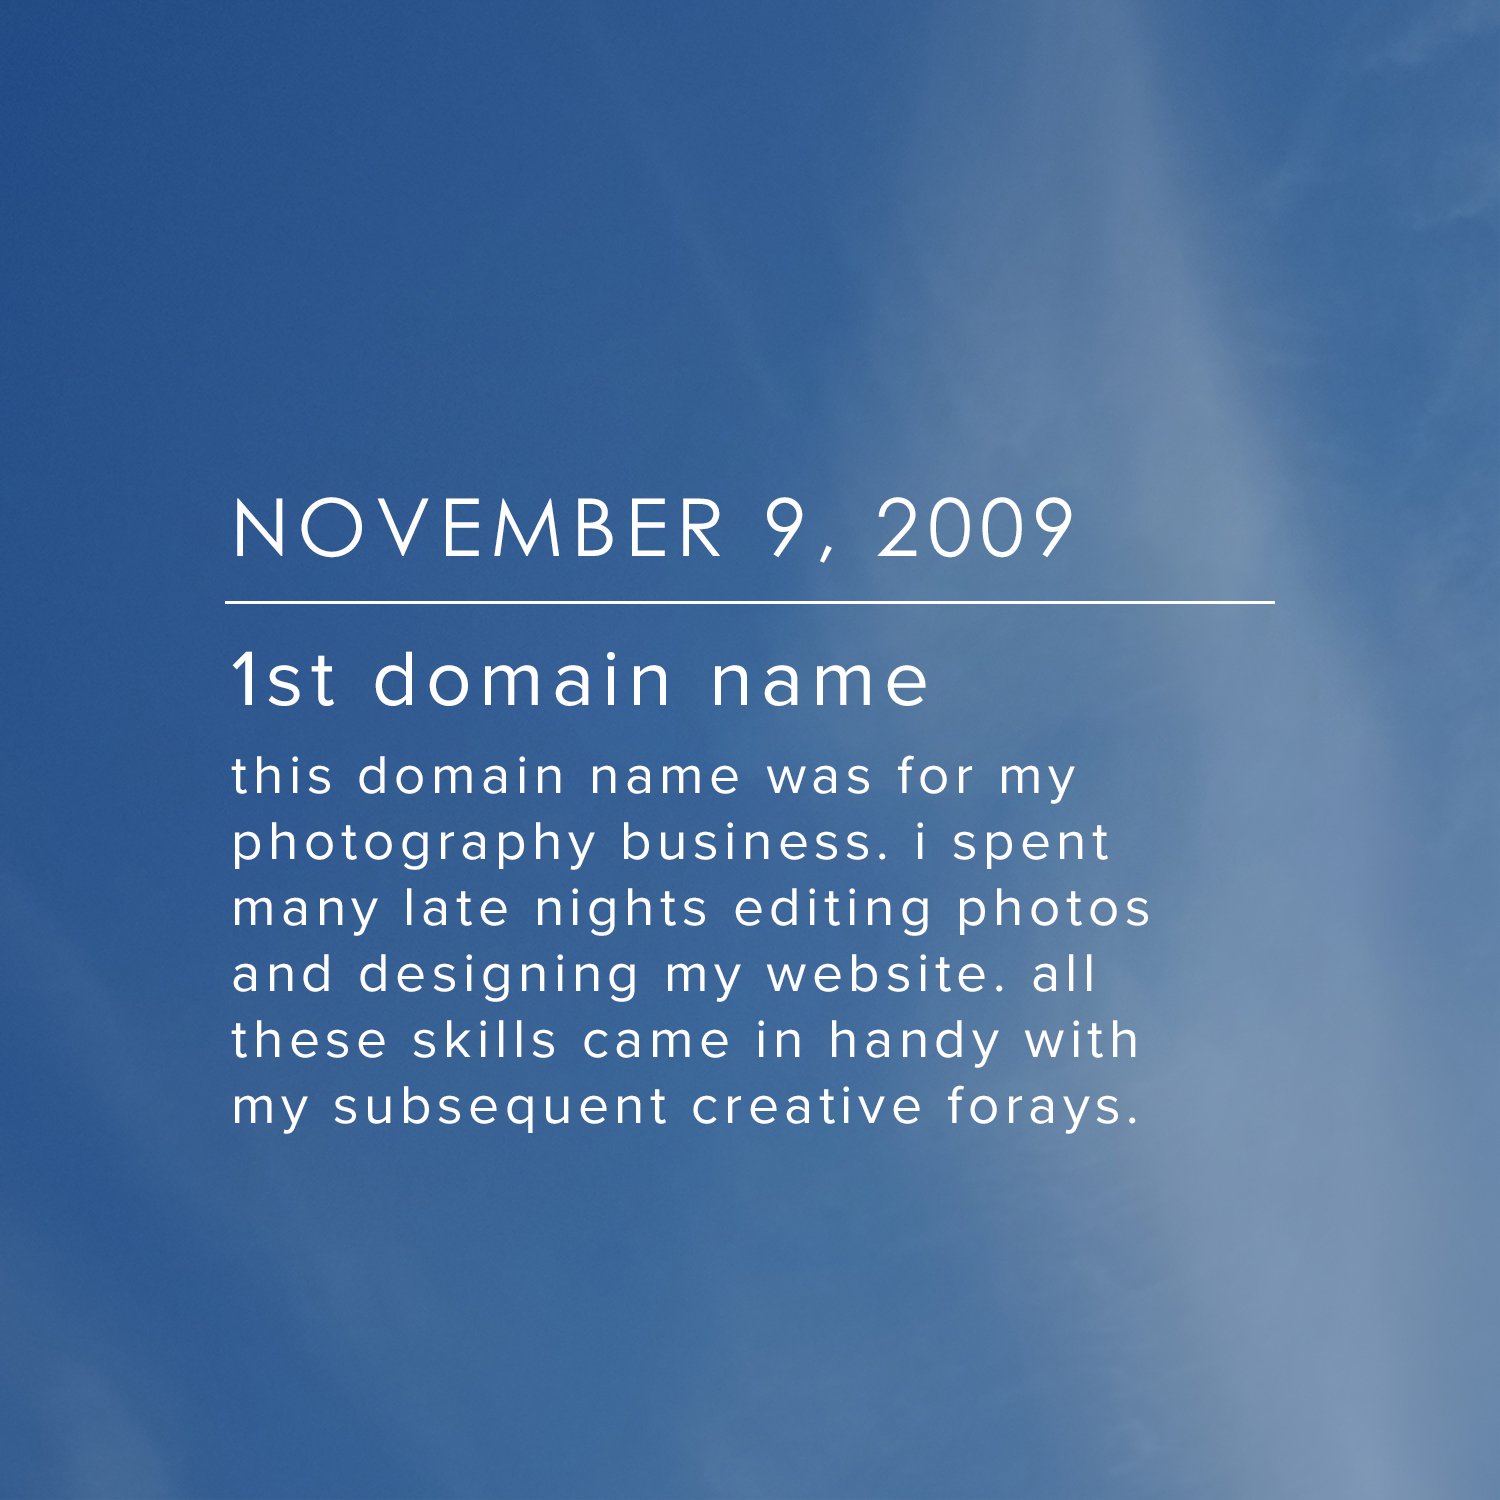 November 9, 2009 - 1st domain name